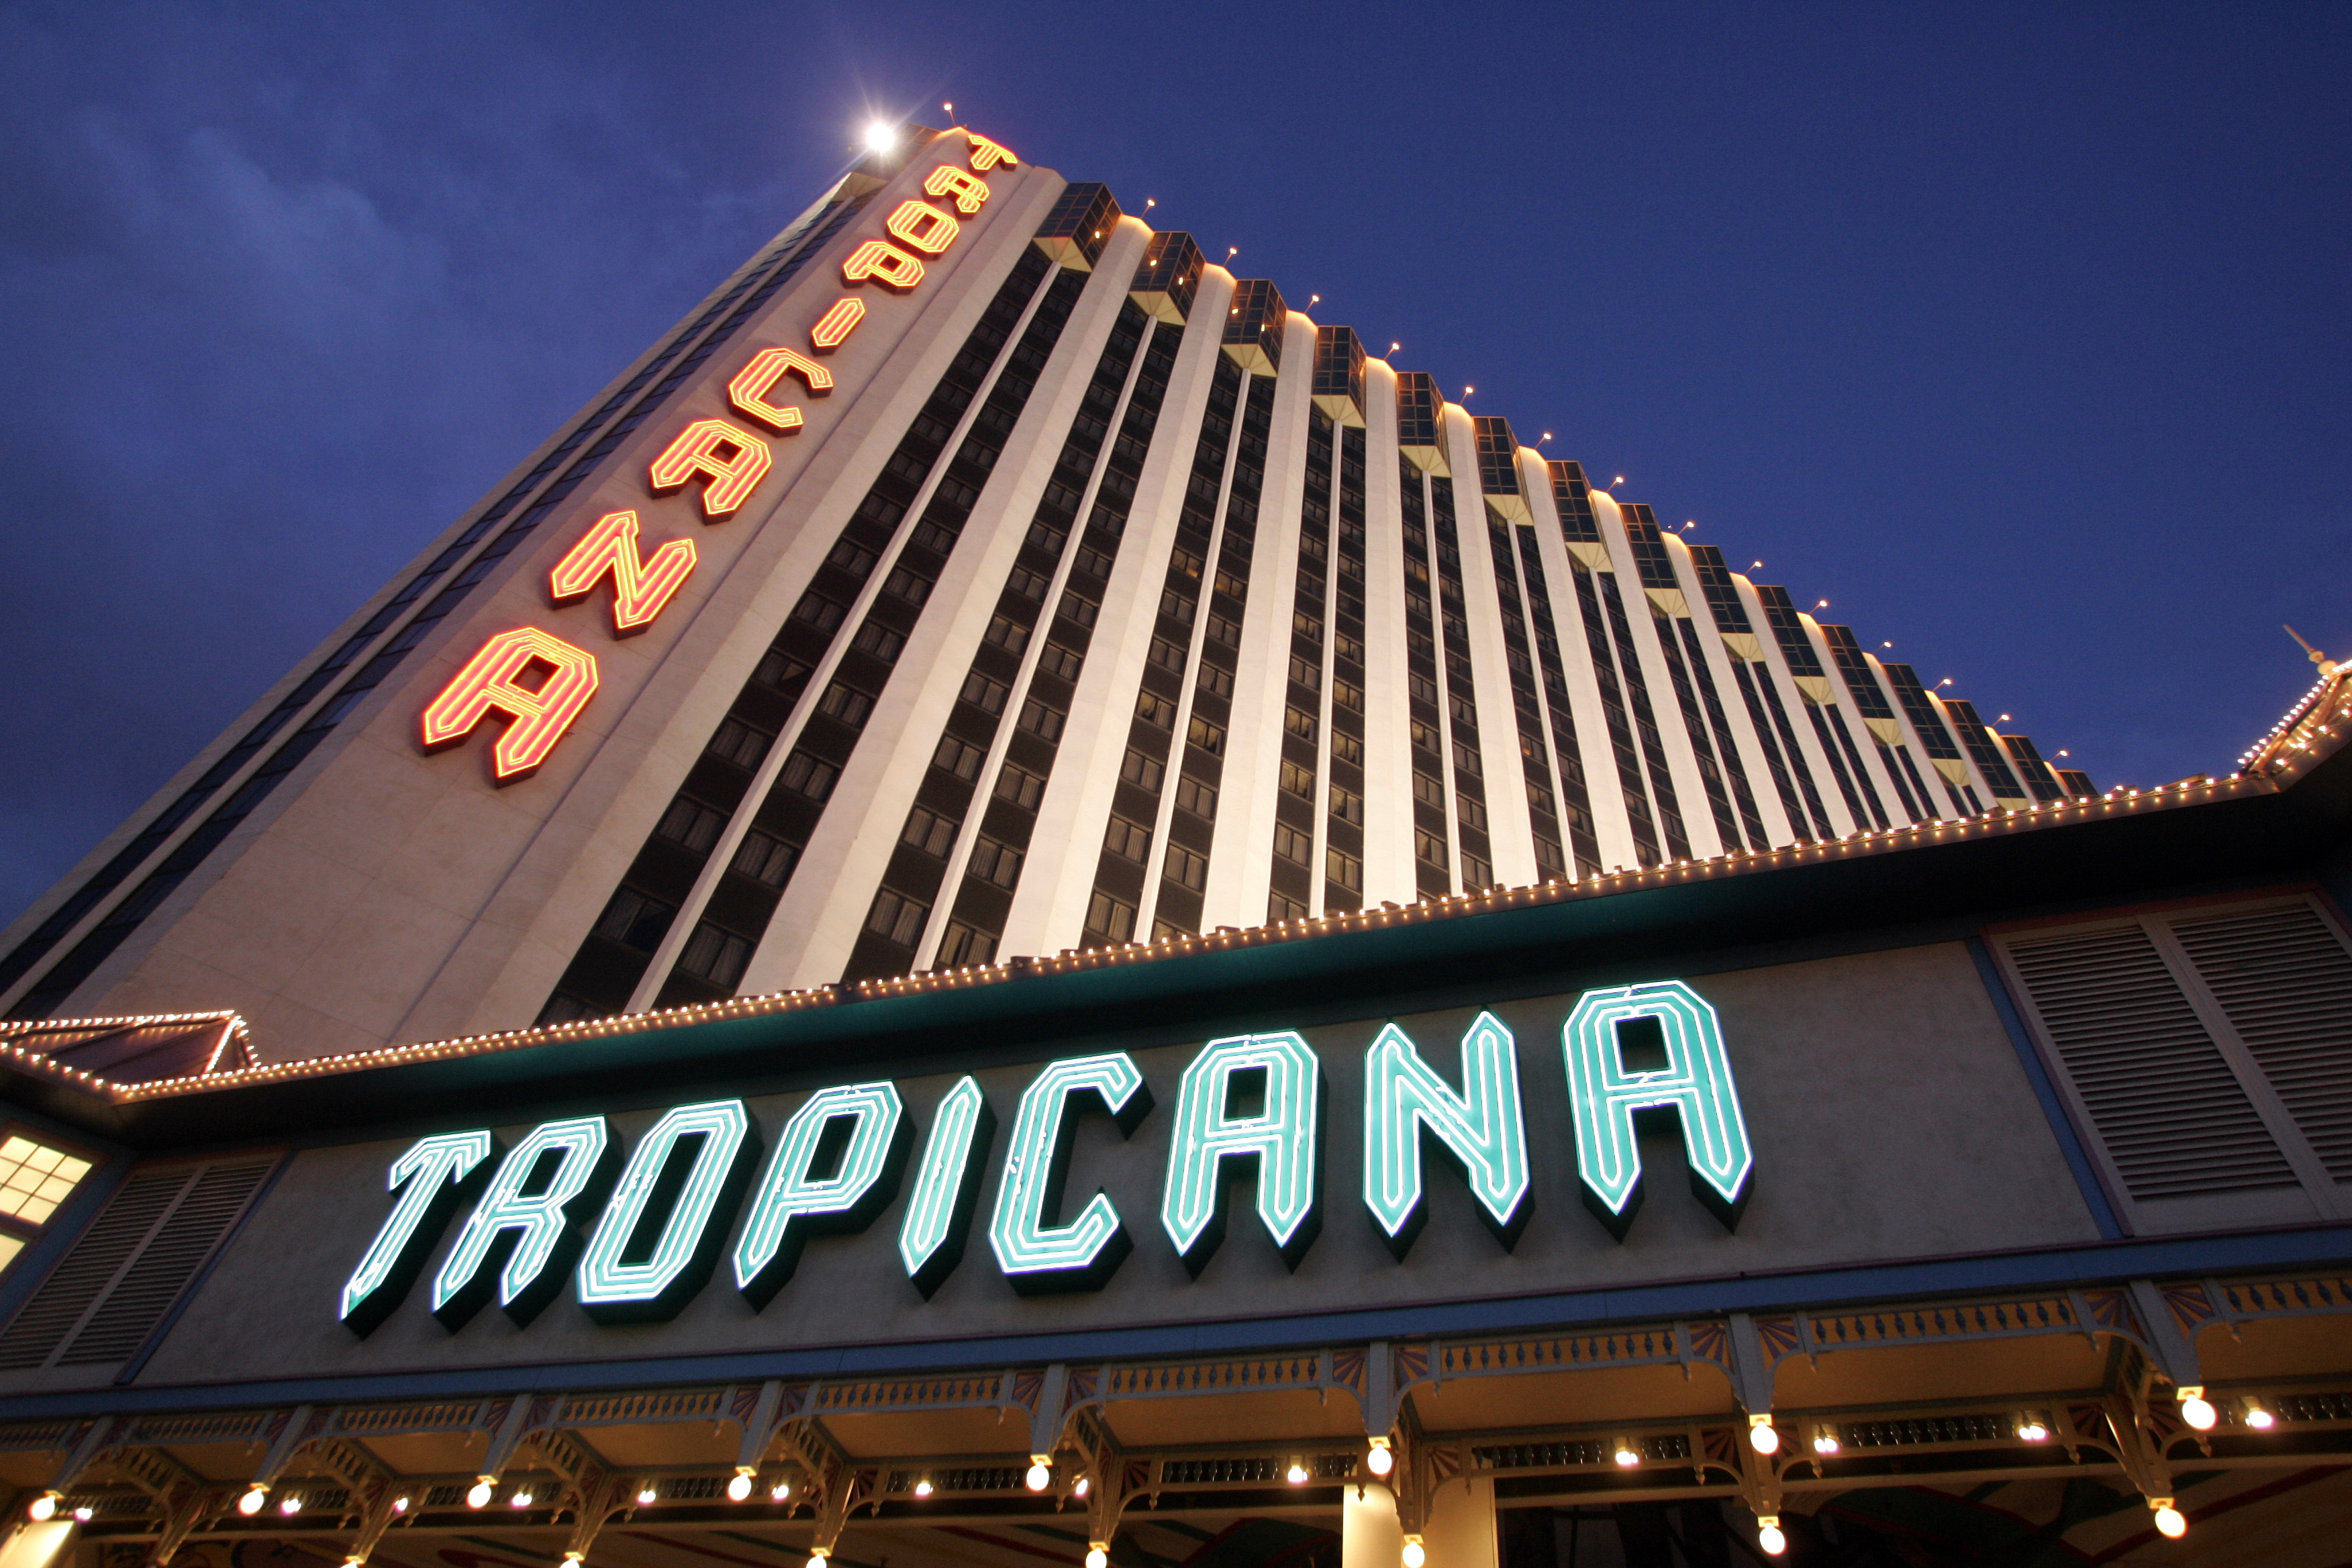 Tropicana gold casino mobile login site